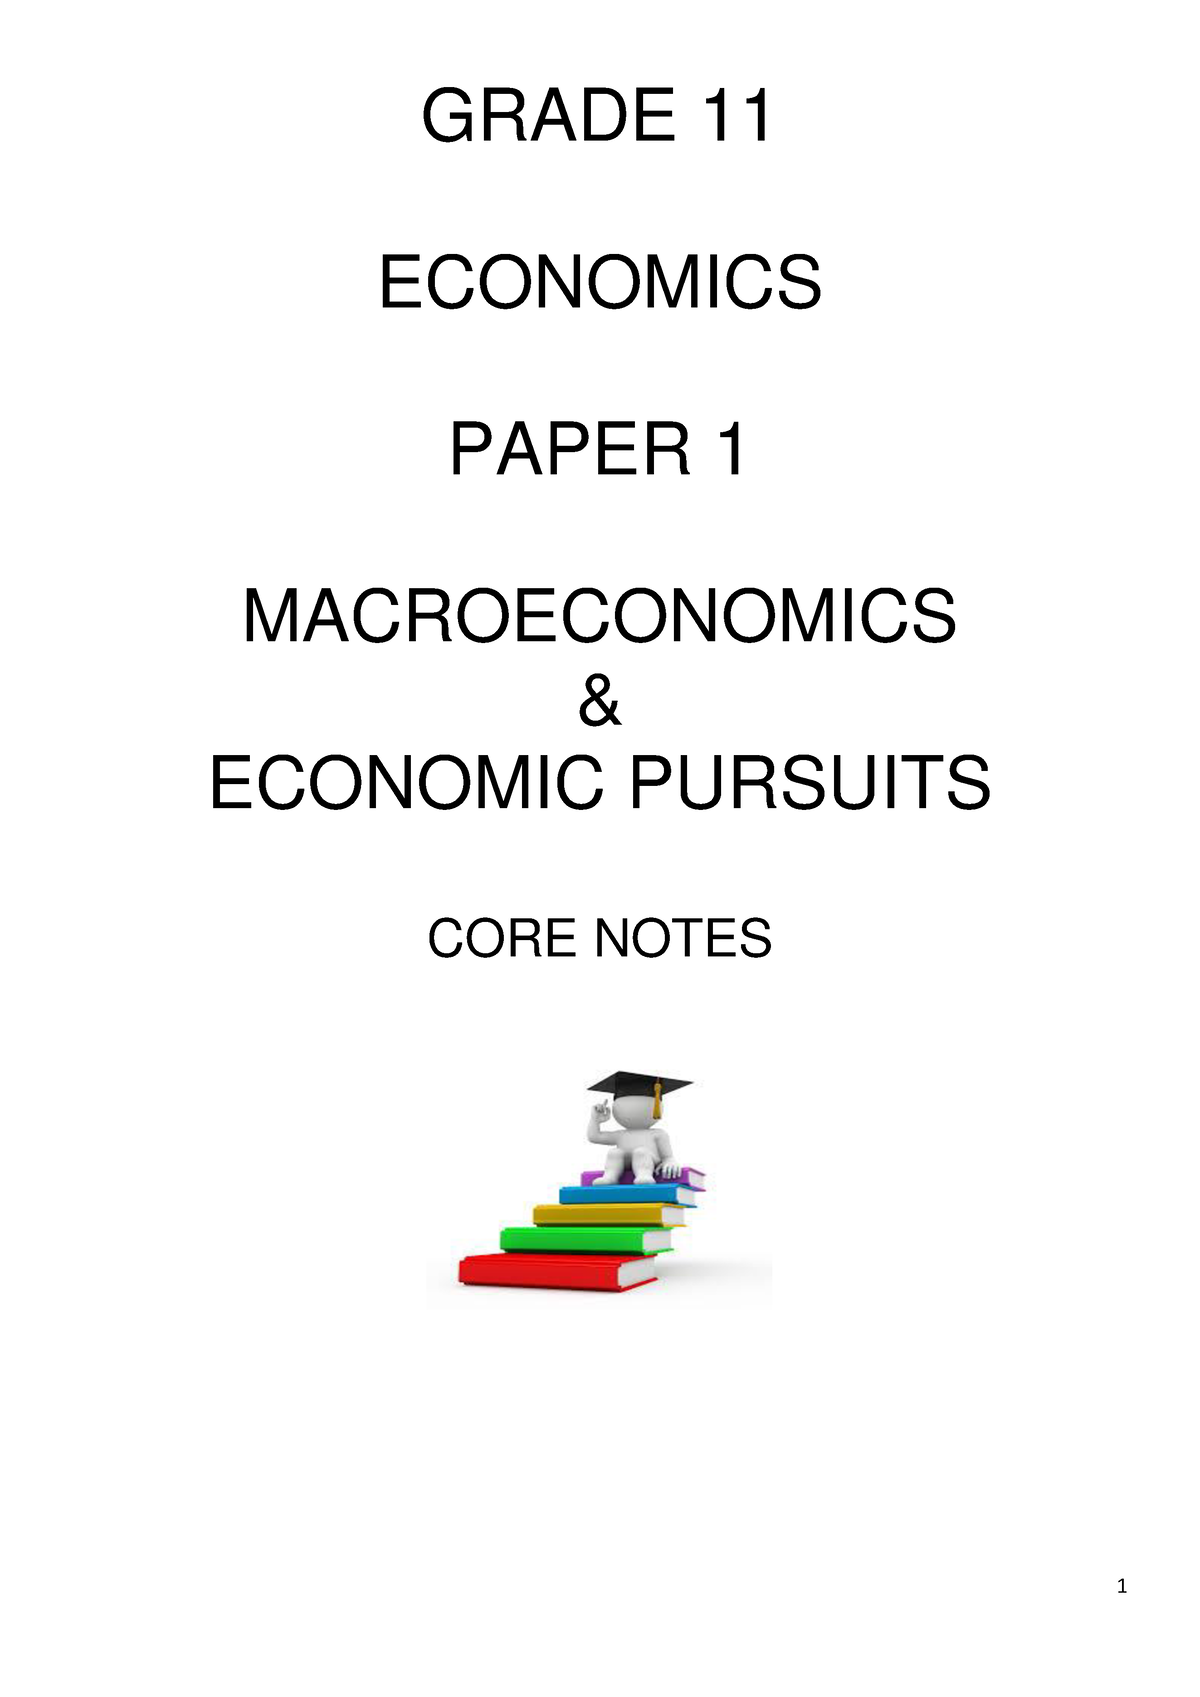 grade 11 economics assignment term 1